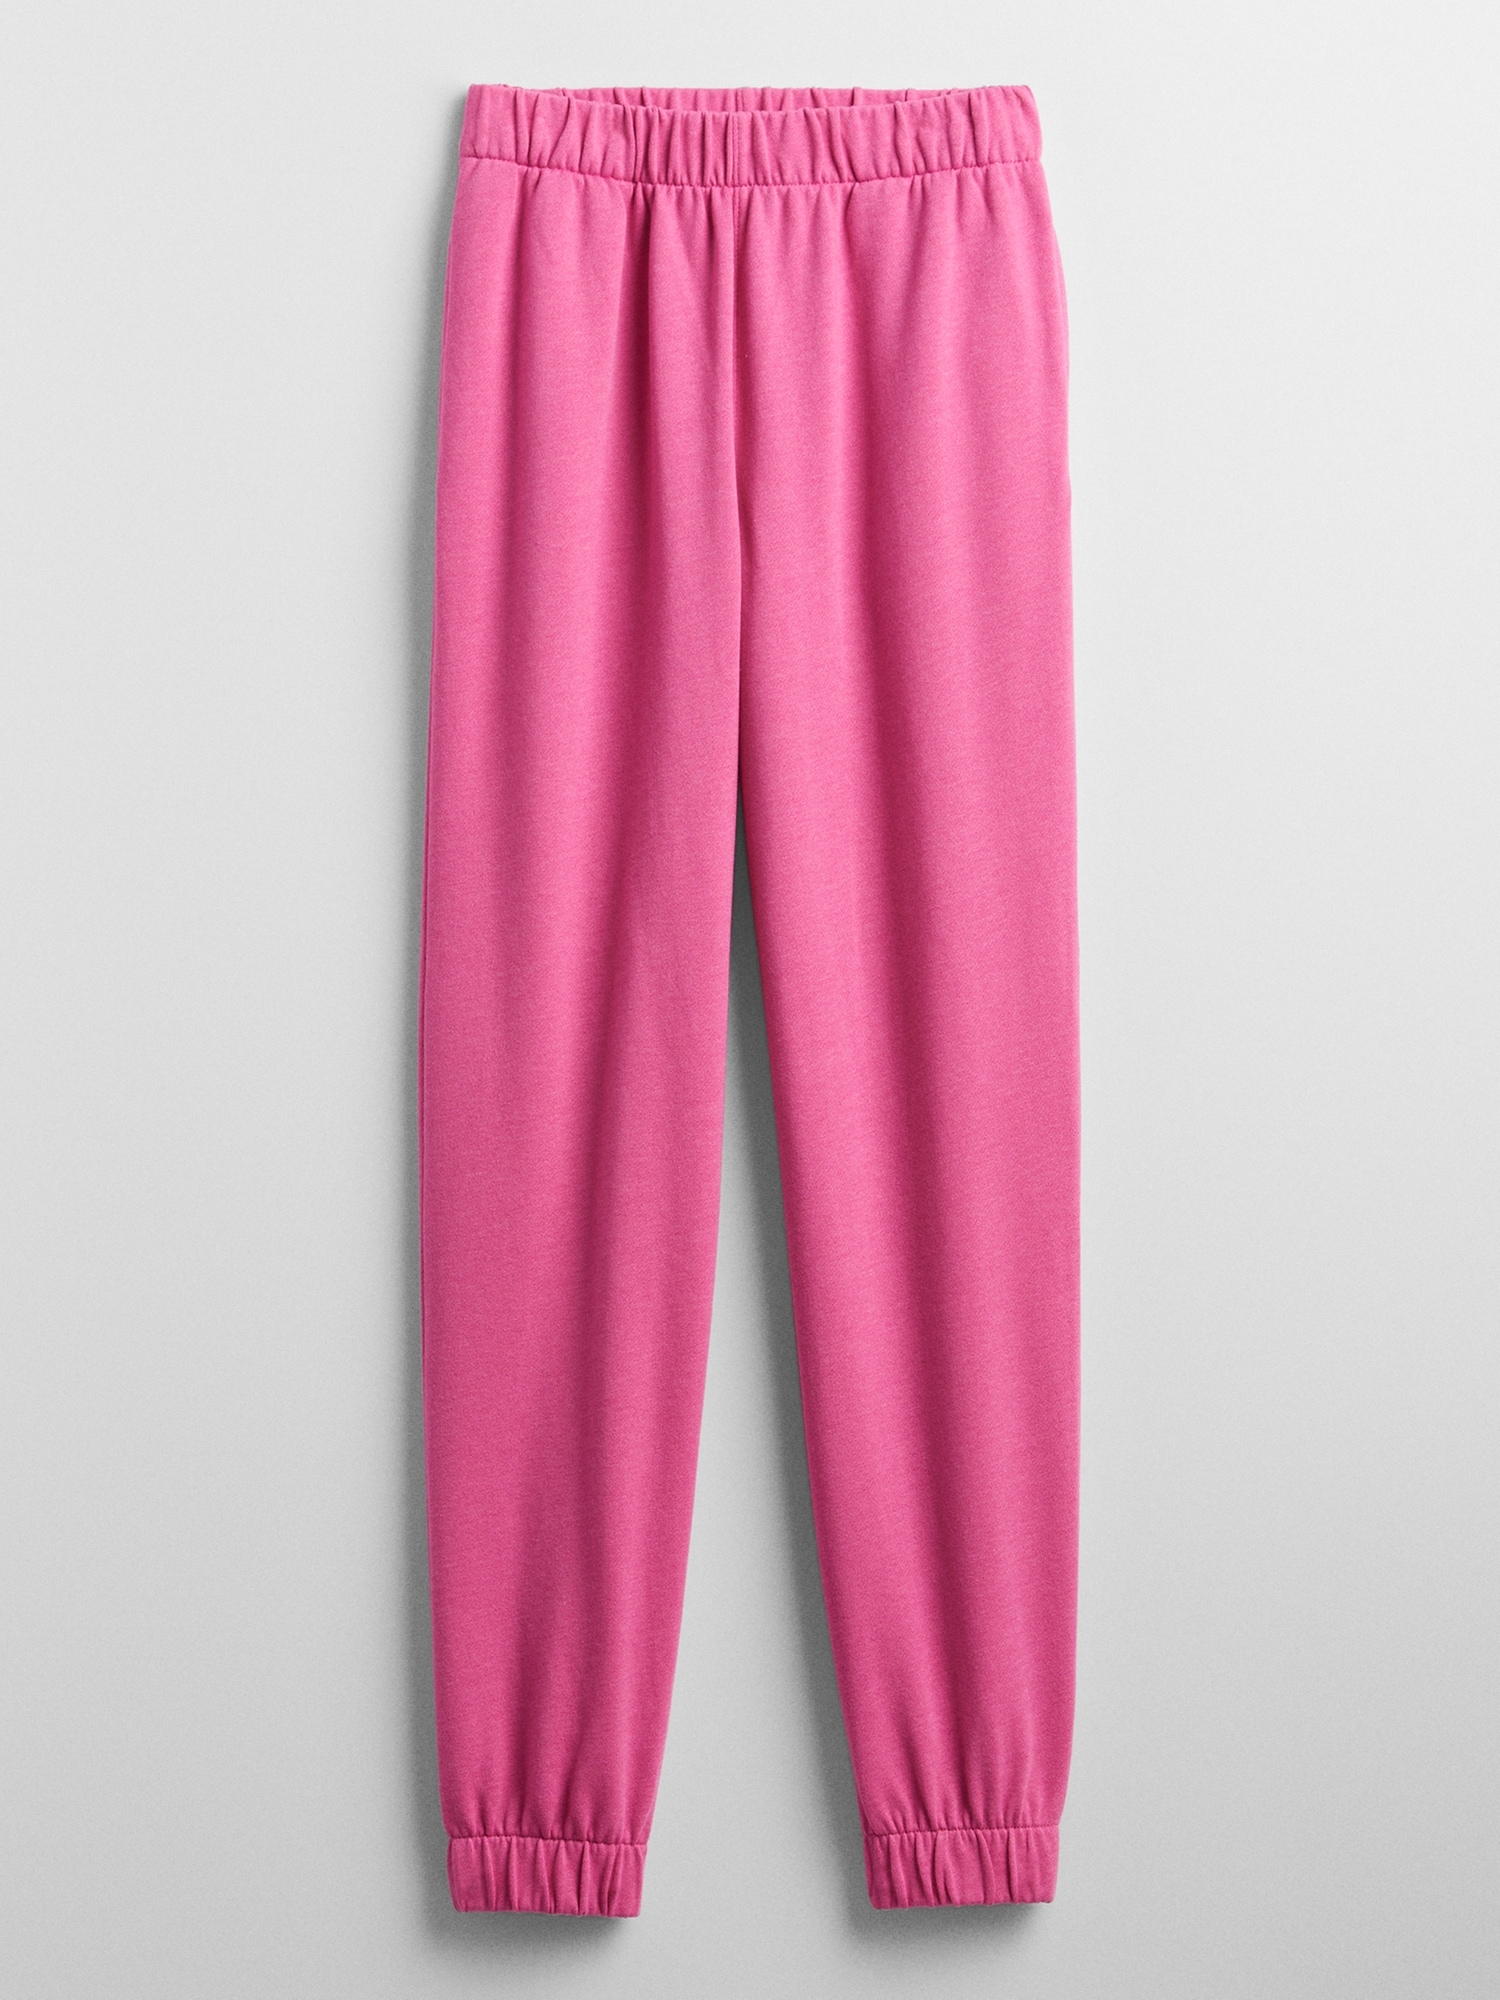 Women's Fleece Relax Fit Cropped Jogger Lounge Sweatpants Running Pants  (Fleece Dusty Teal, X-Large) 